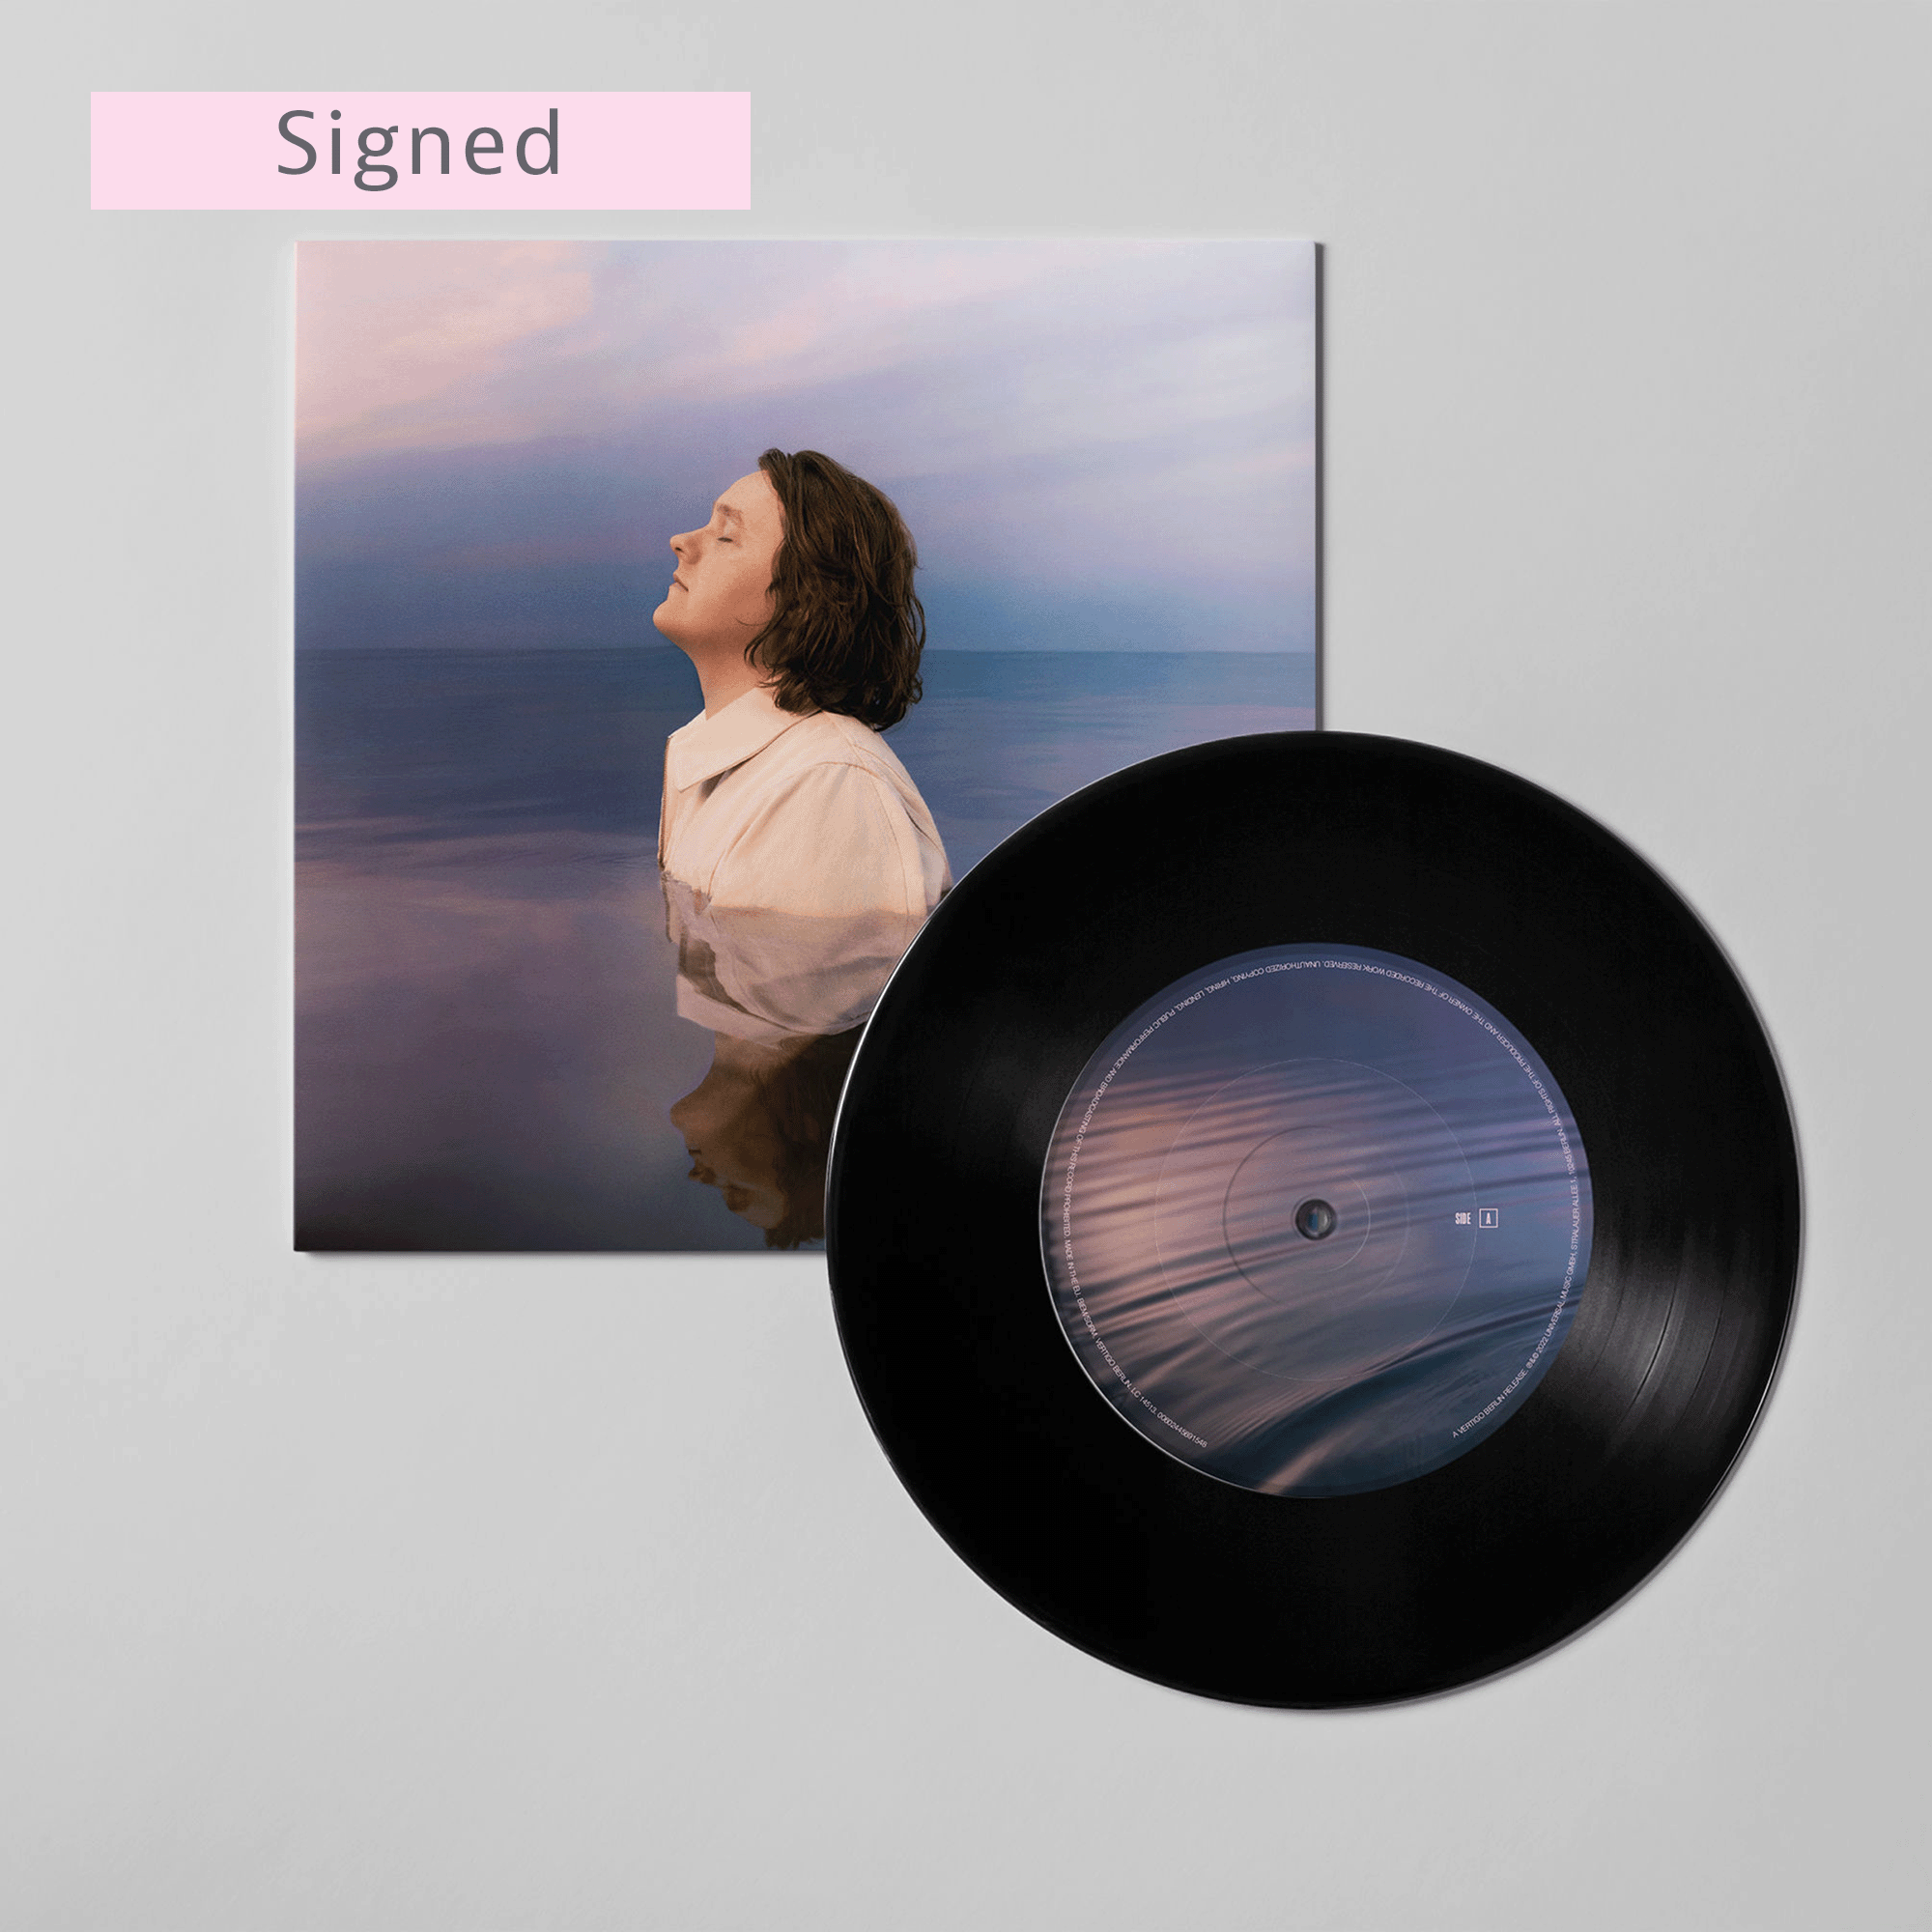 Forget Me - Signed Limited Edition 7 Vinyl – Lewis Capaldi Shop